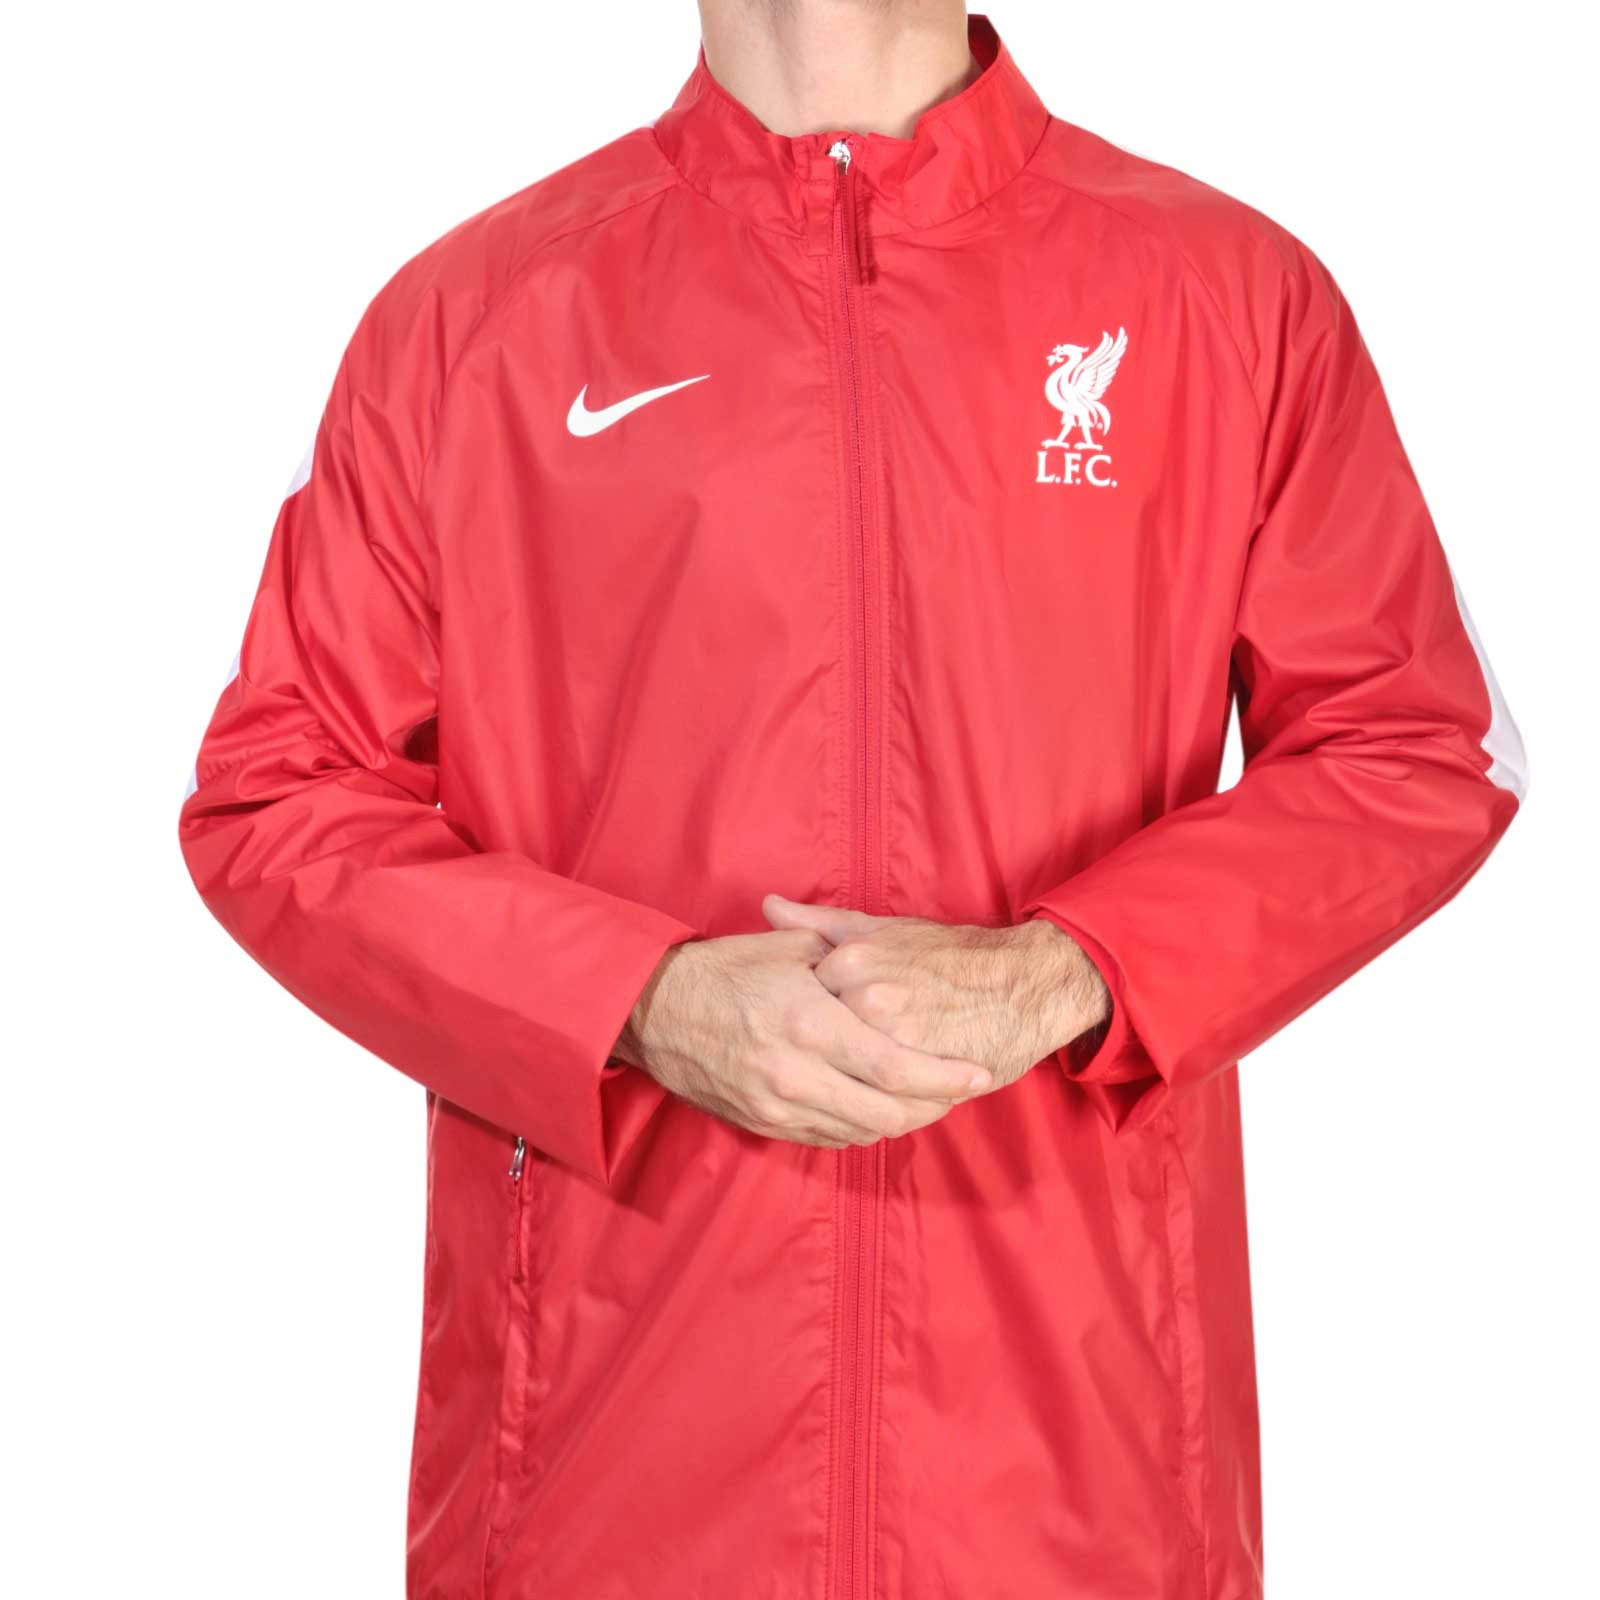 Liverpool FC - Chaqueta cortavientos oficial - Para hombre - Impermeable